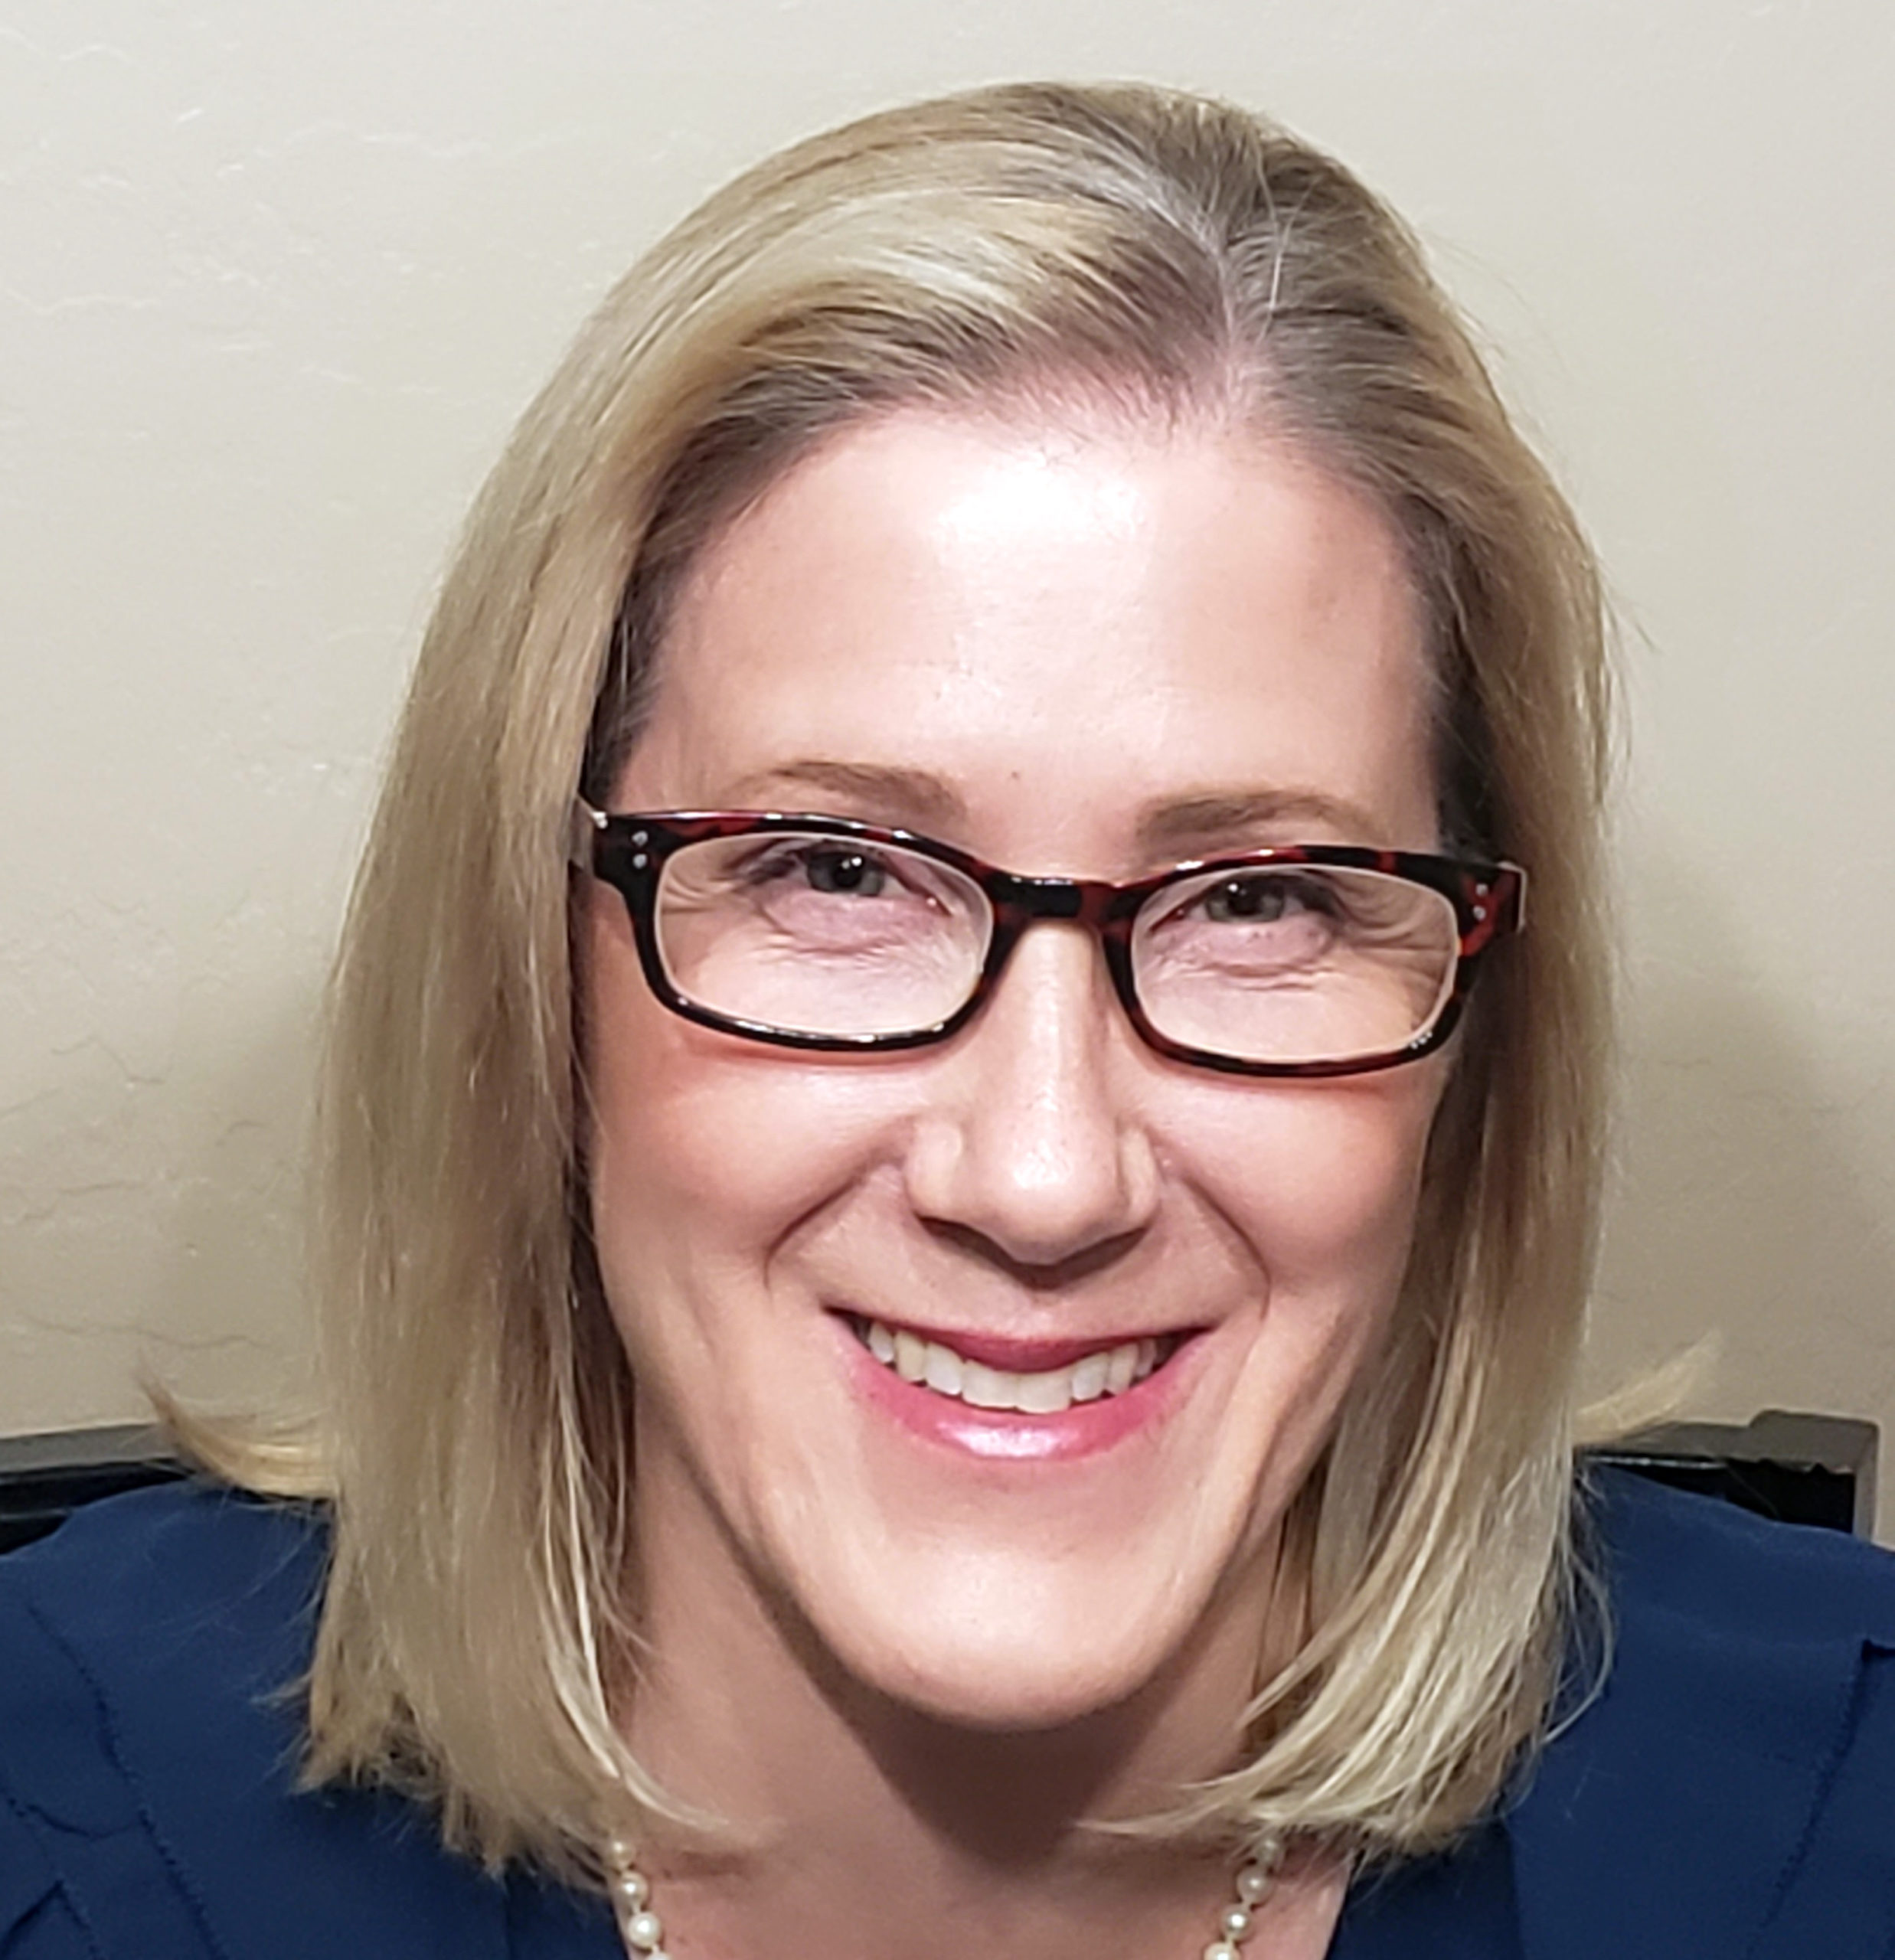 Janet Hartkopf is the Cyber Program Director at Basha High School in Arizona. 